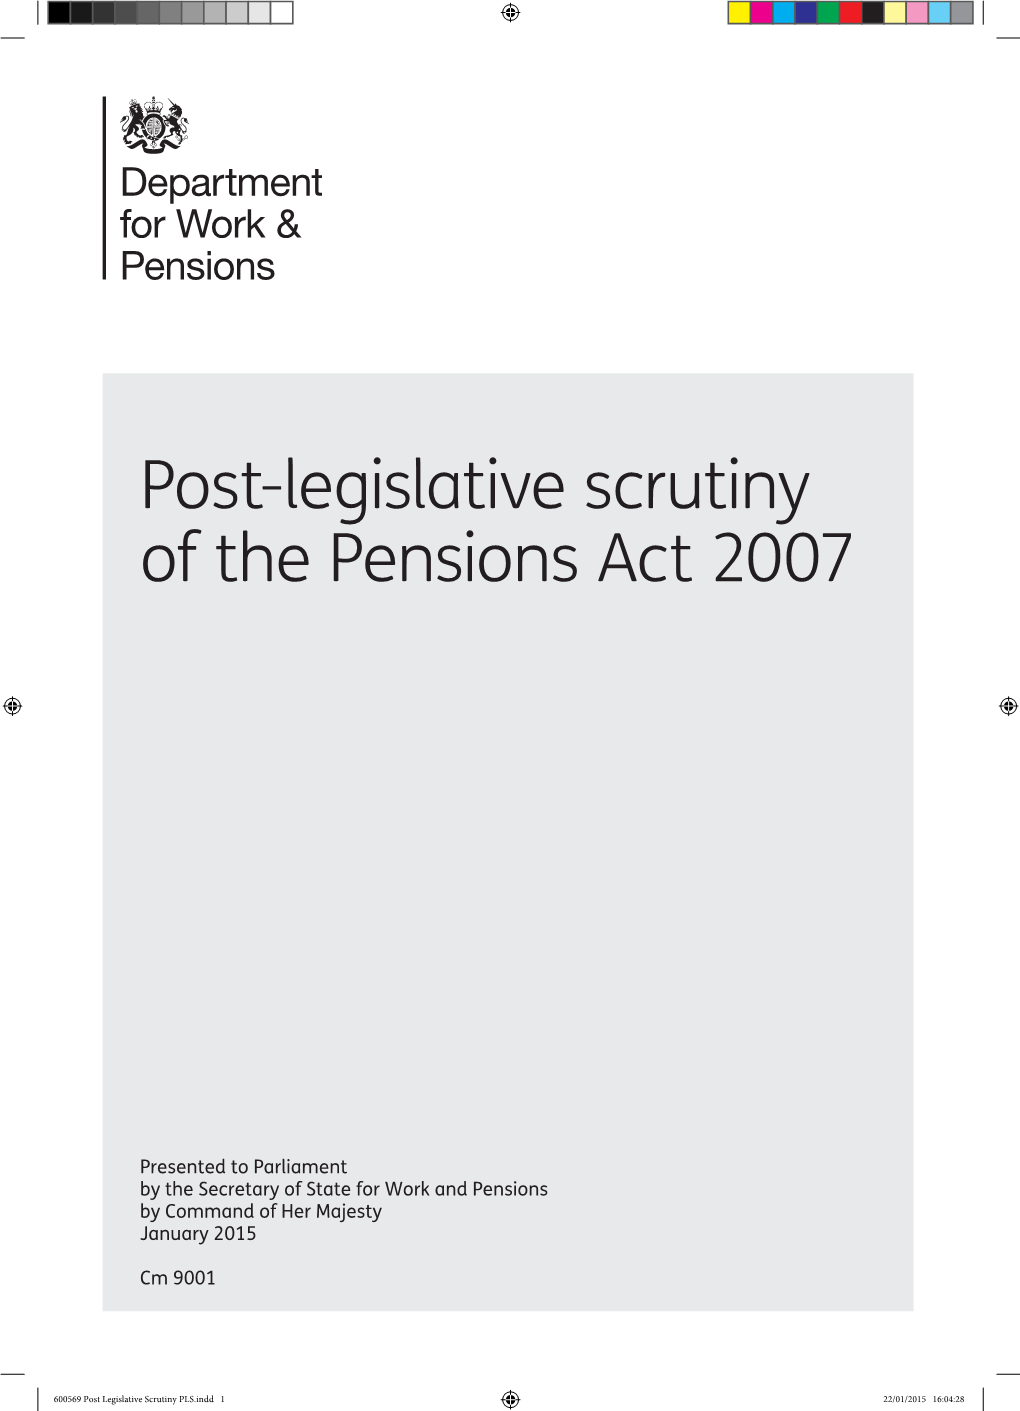 Post-Legislative Scrutiny of the Pensions Act 2007